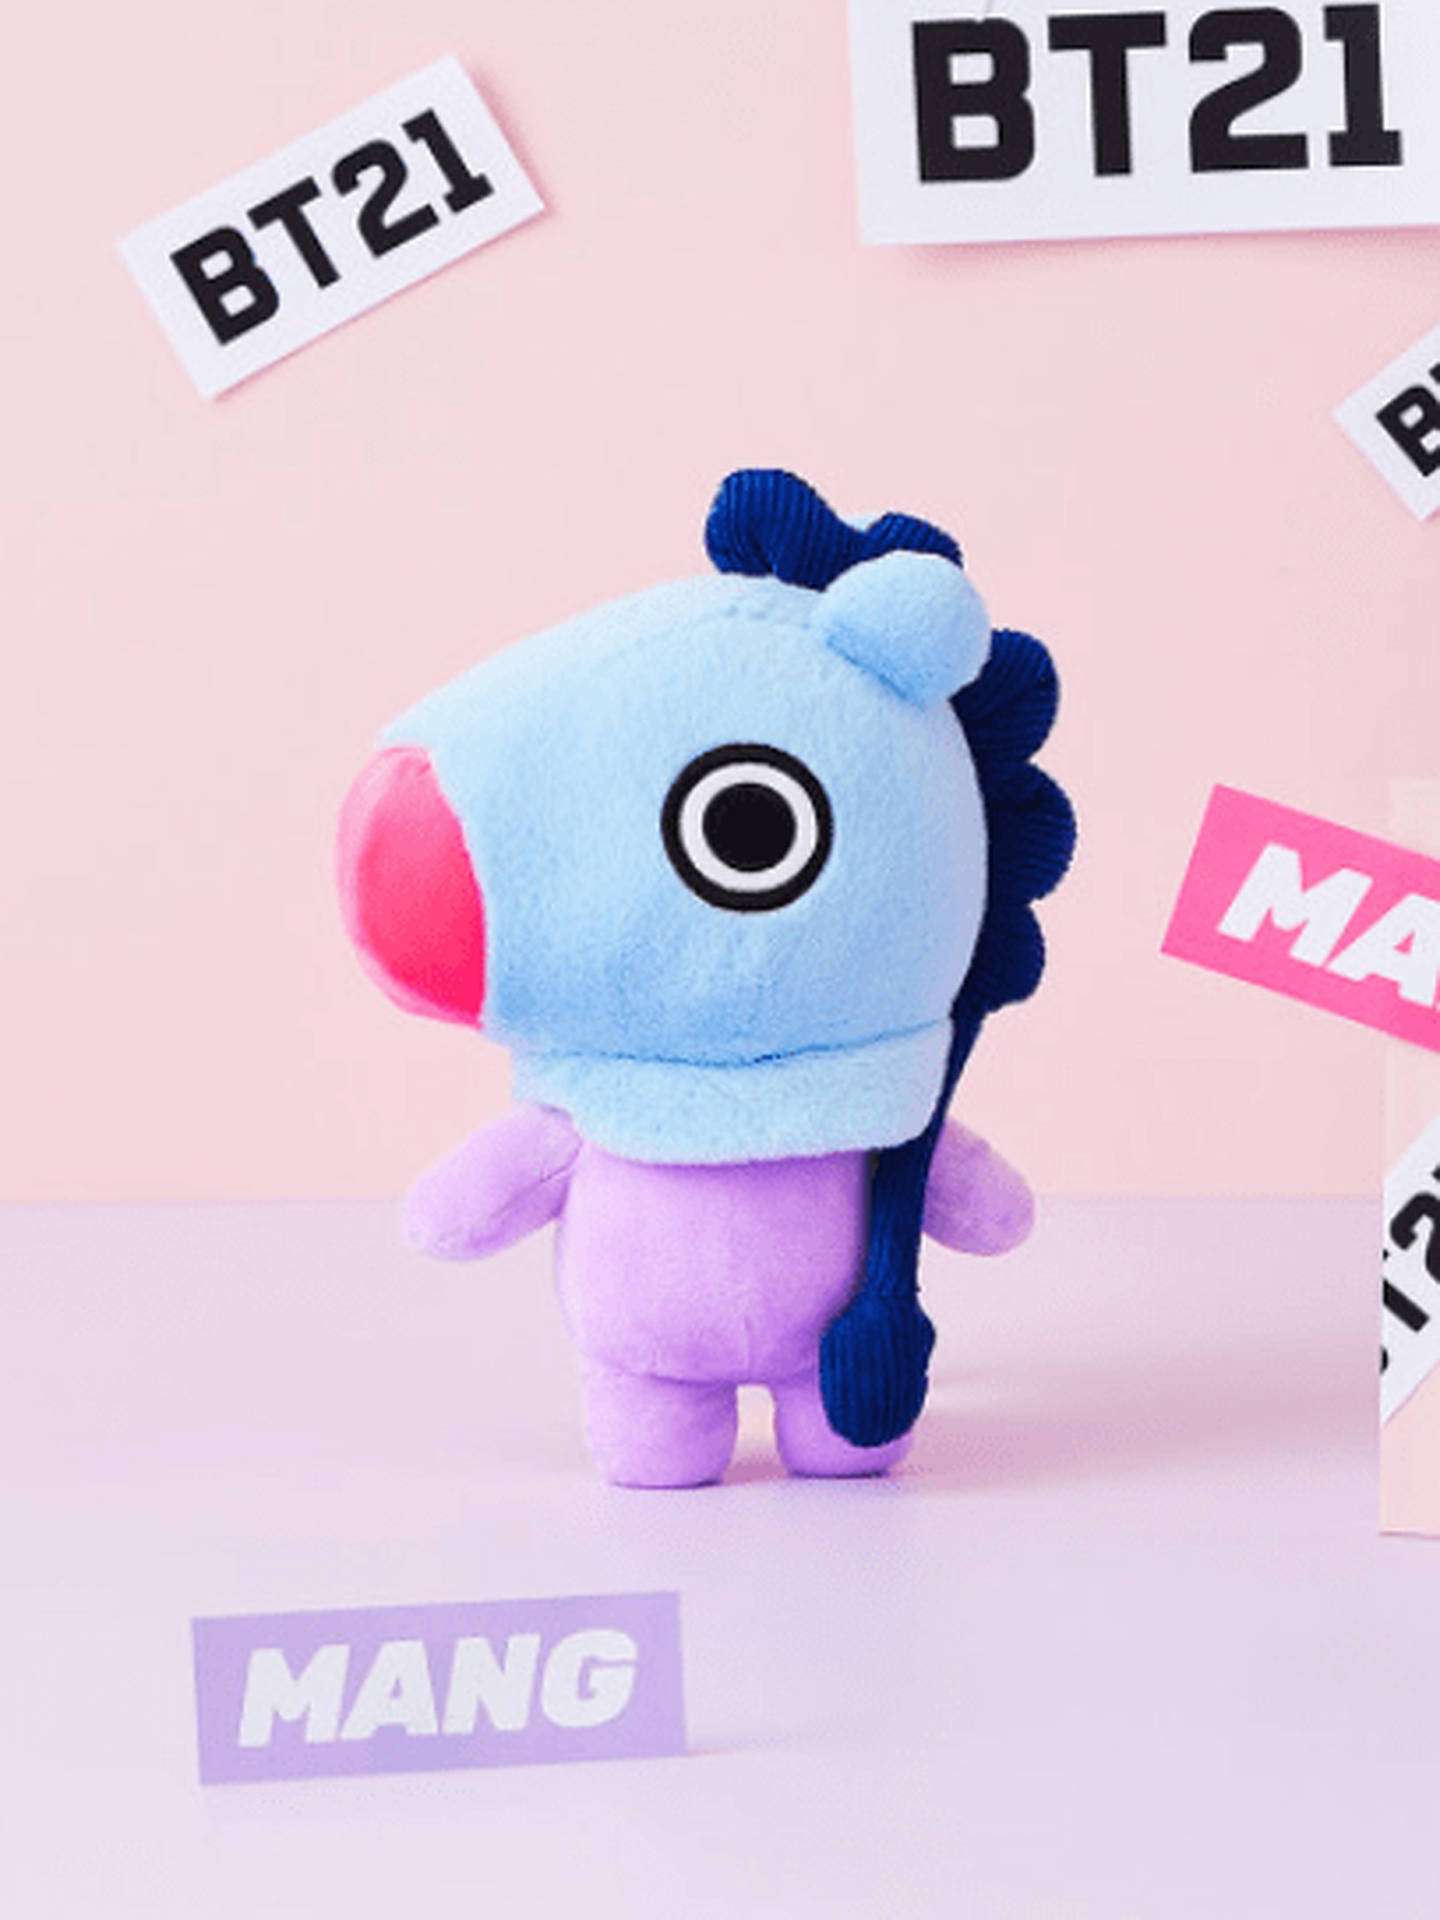 Mang Bt21 Stuffed Toy